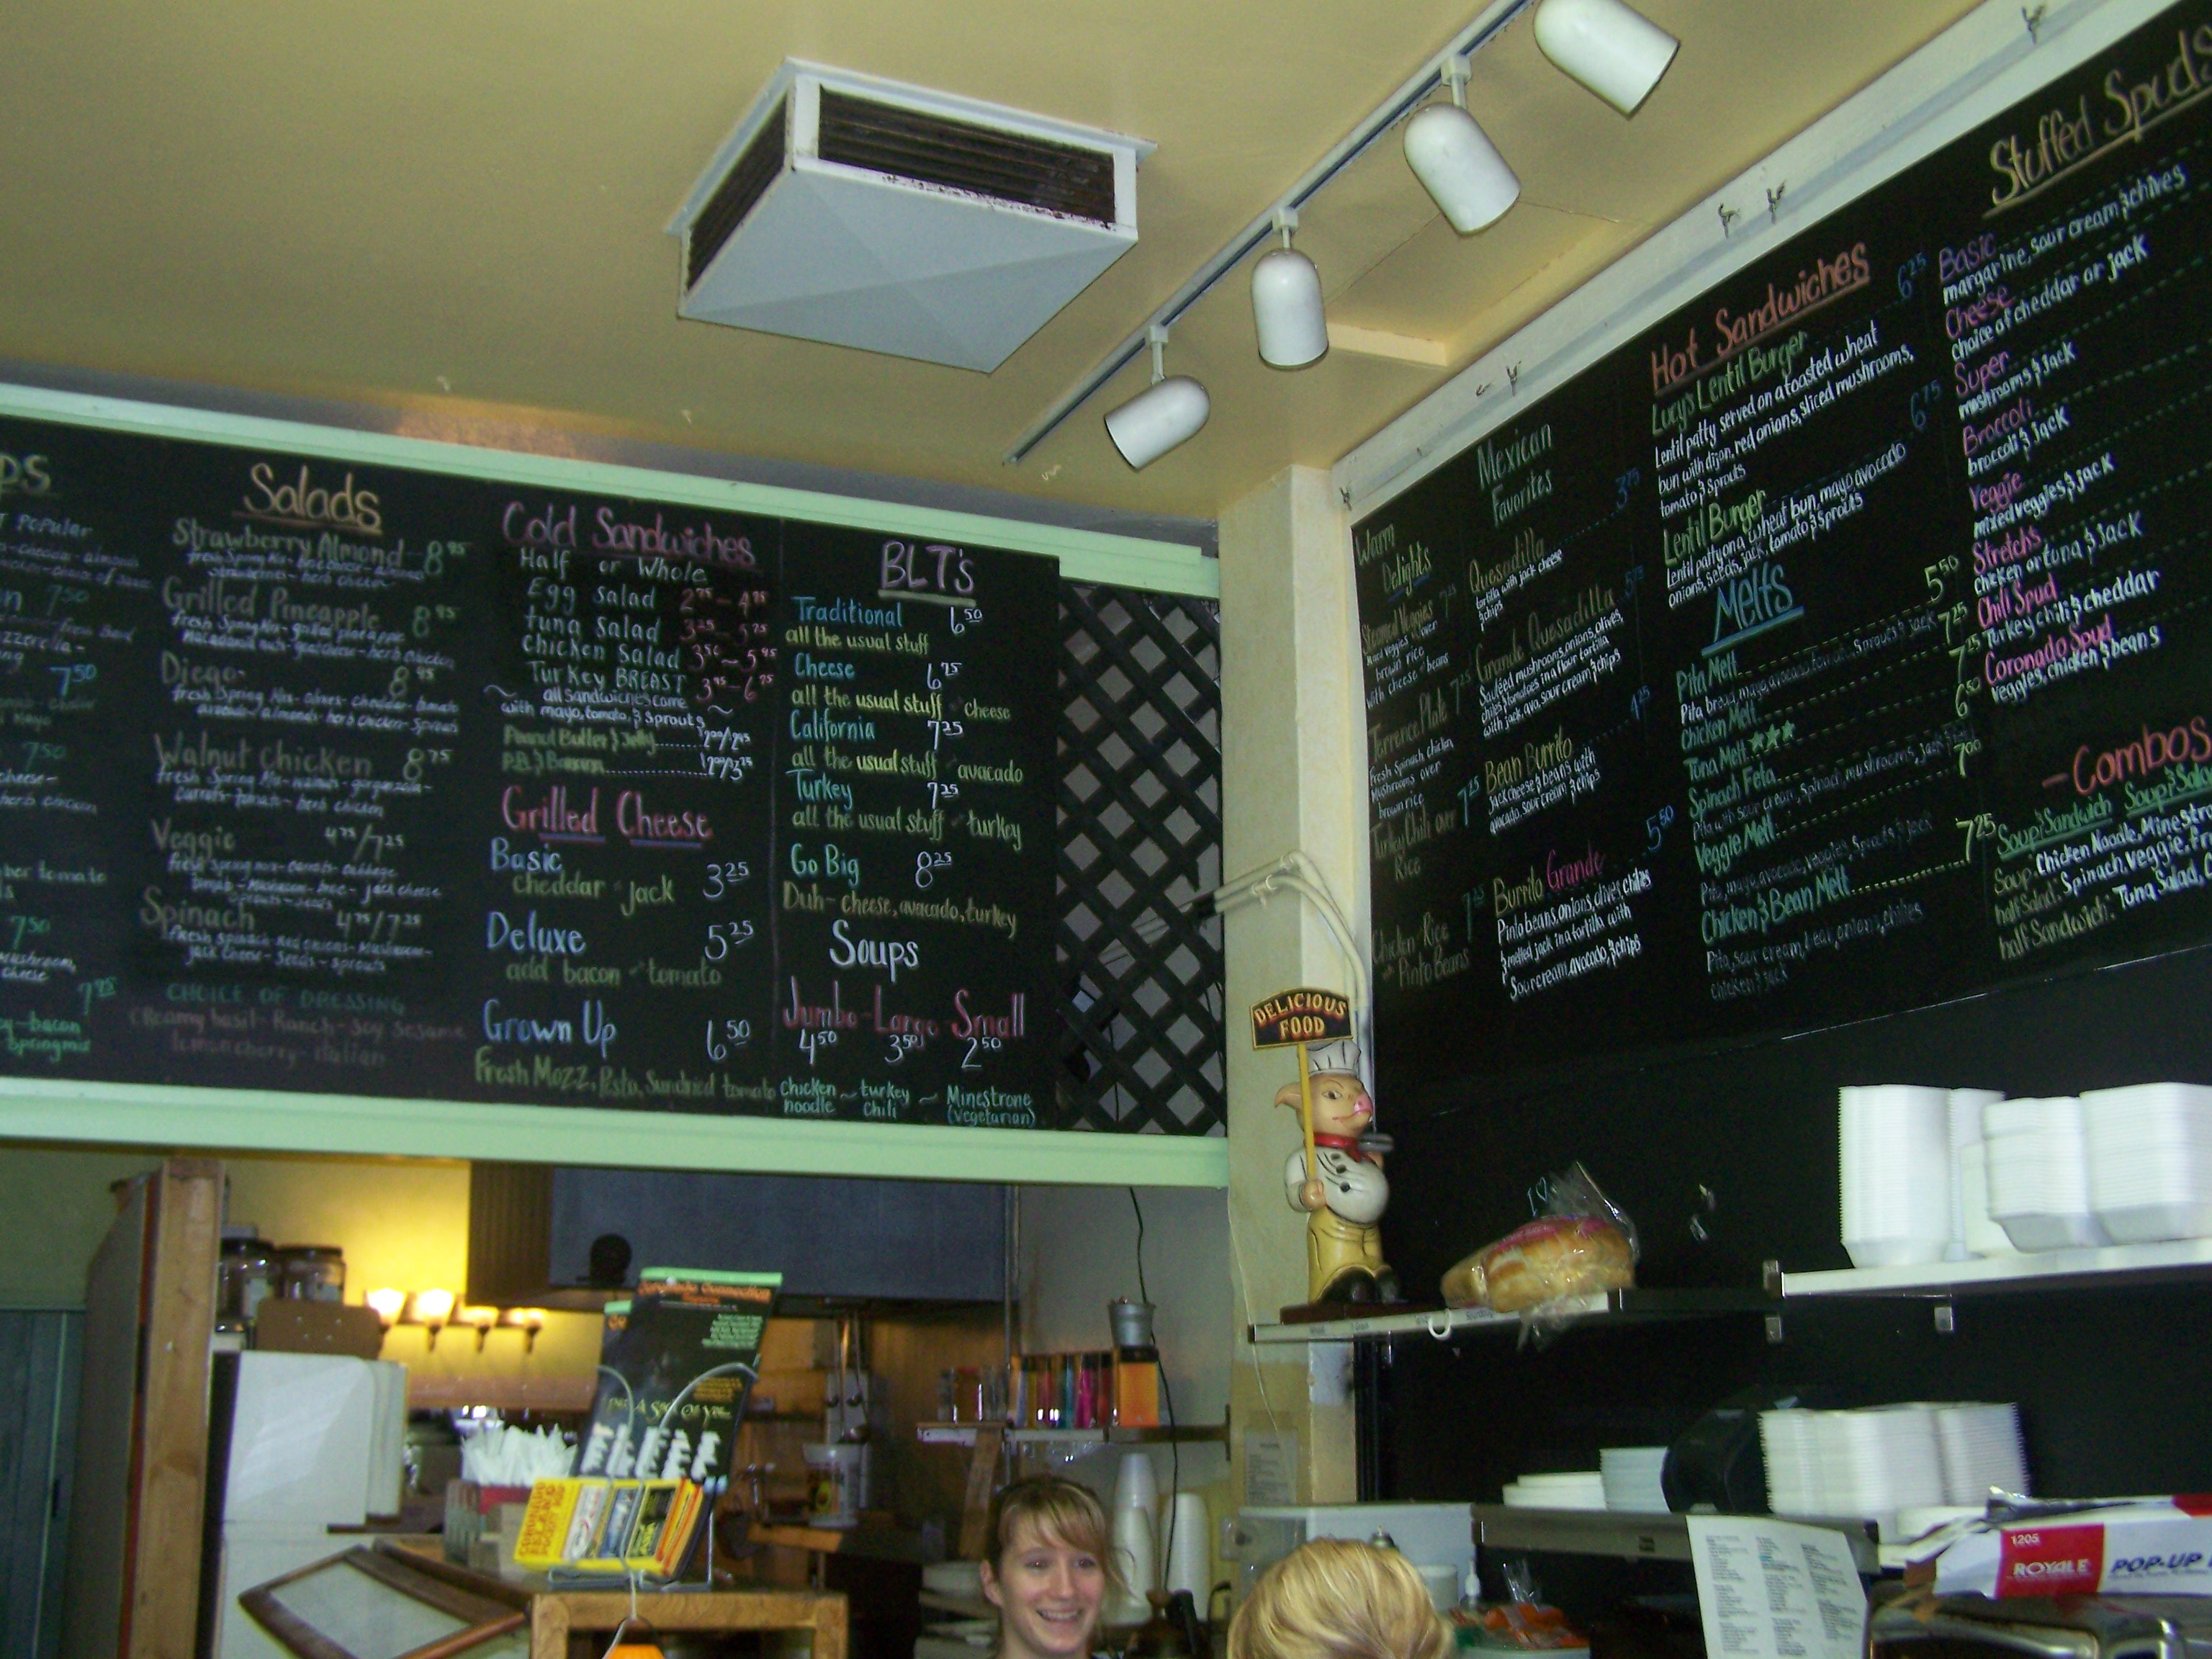 Stretch's Cafe - Menu Board - Coronado Times